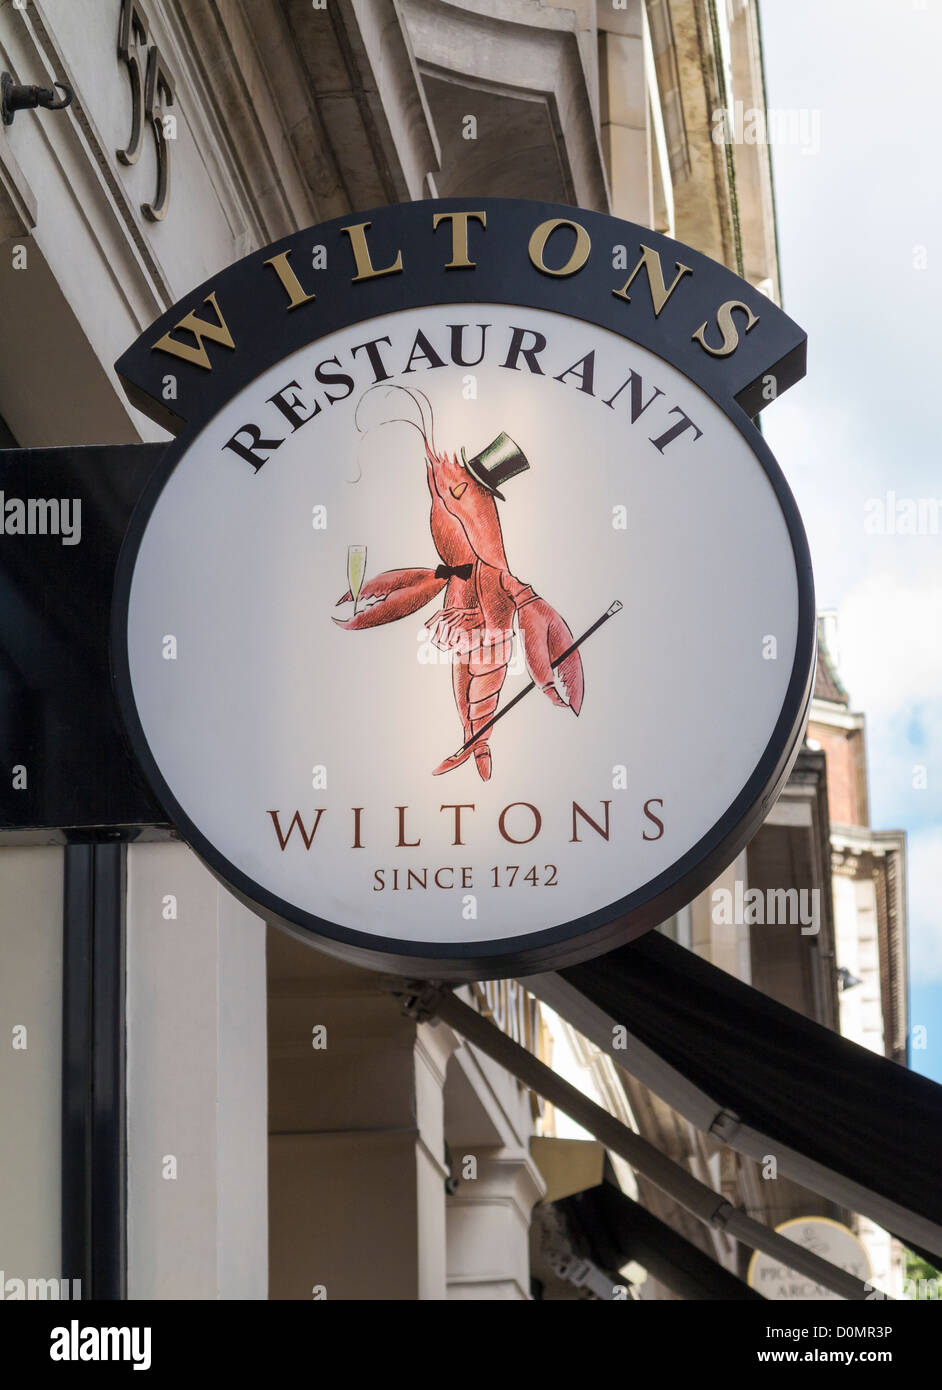 Wiltons restaurant sign, London, England Stock Photo